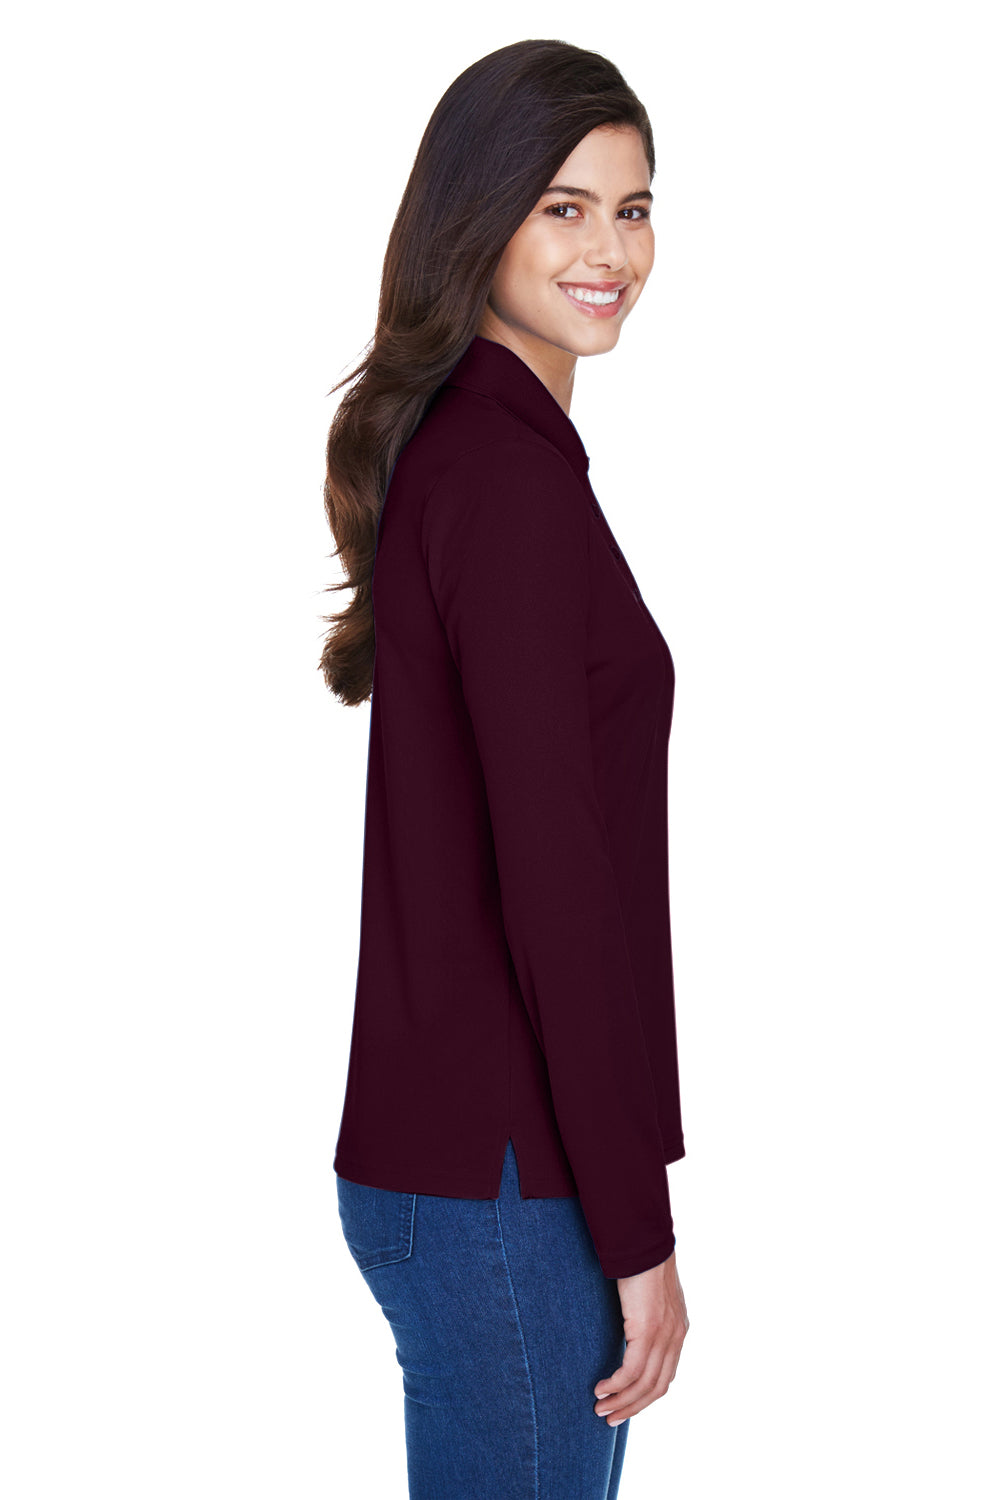 Core 365 78192 Womens Pinnacle Performance Moisture Wicking Long Sleeve Polo Shirt Burgundy Side